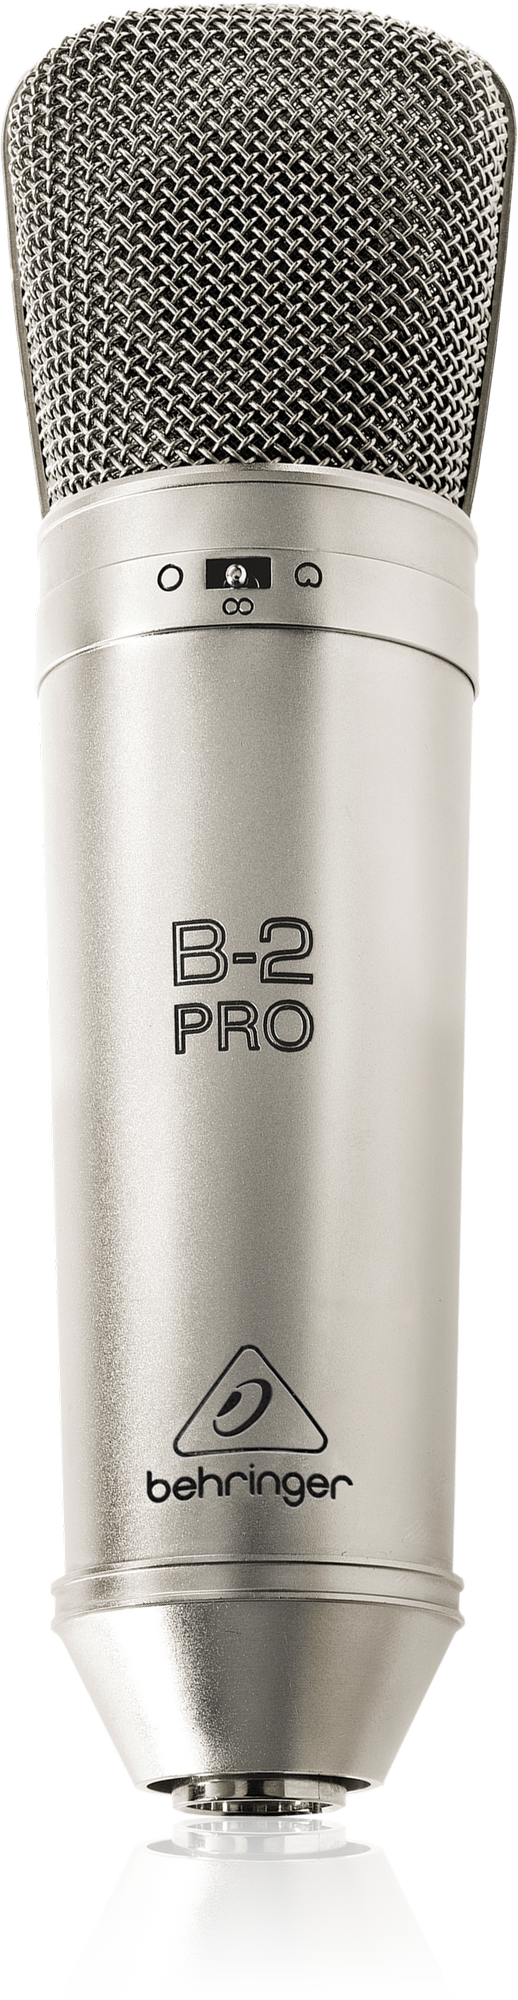 Behringer B-2 PRO